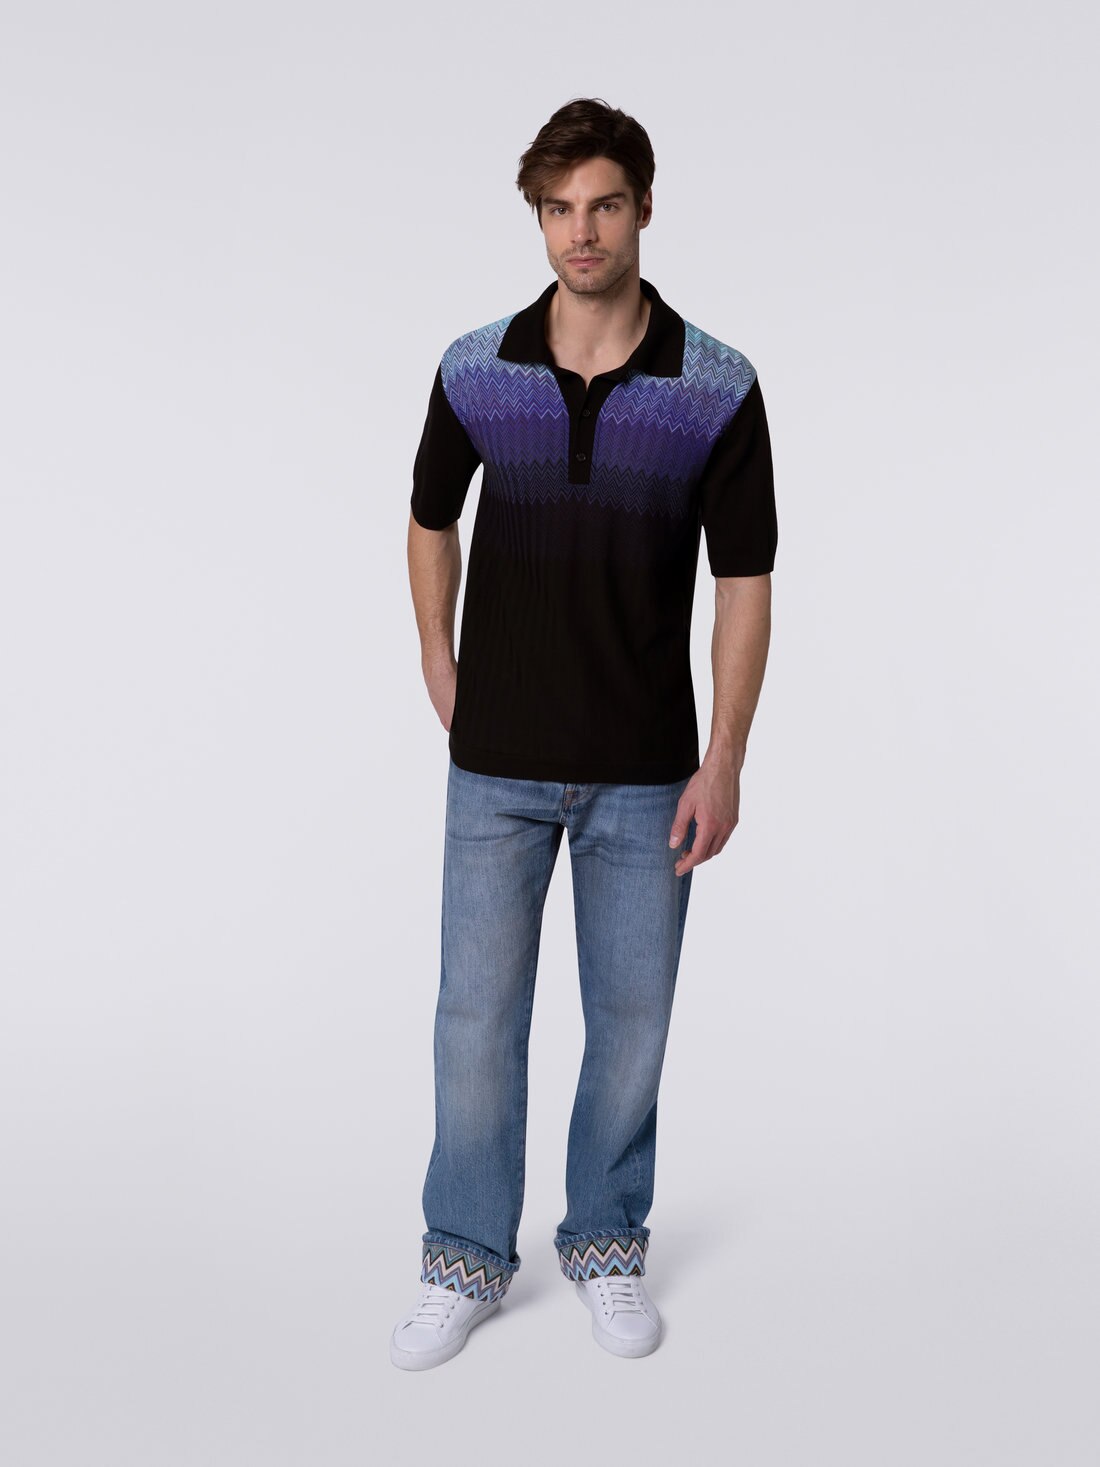 Cotton and silk short-sleeved polo shirt, Black & Blue - US23S207BK021XS91DV - 1